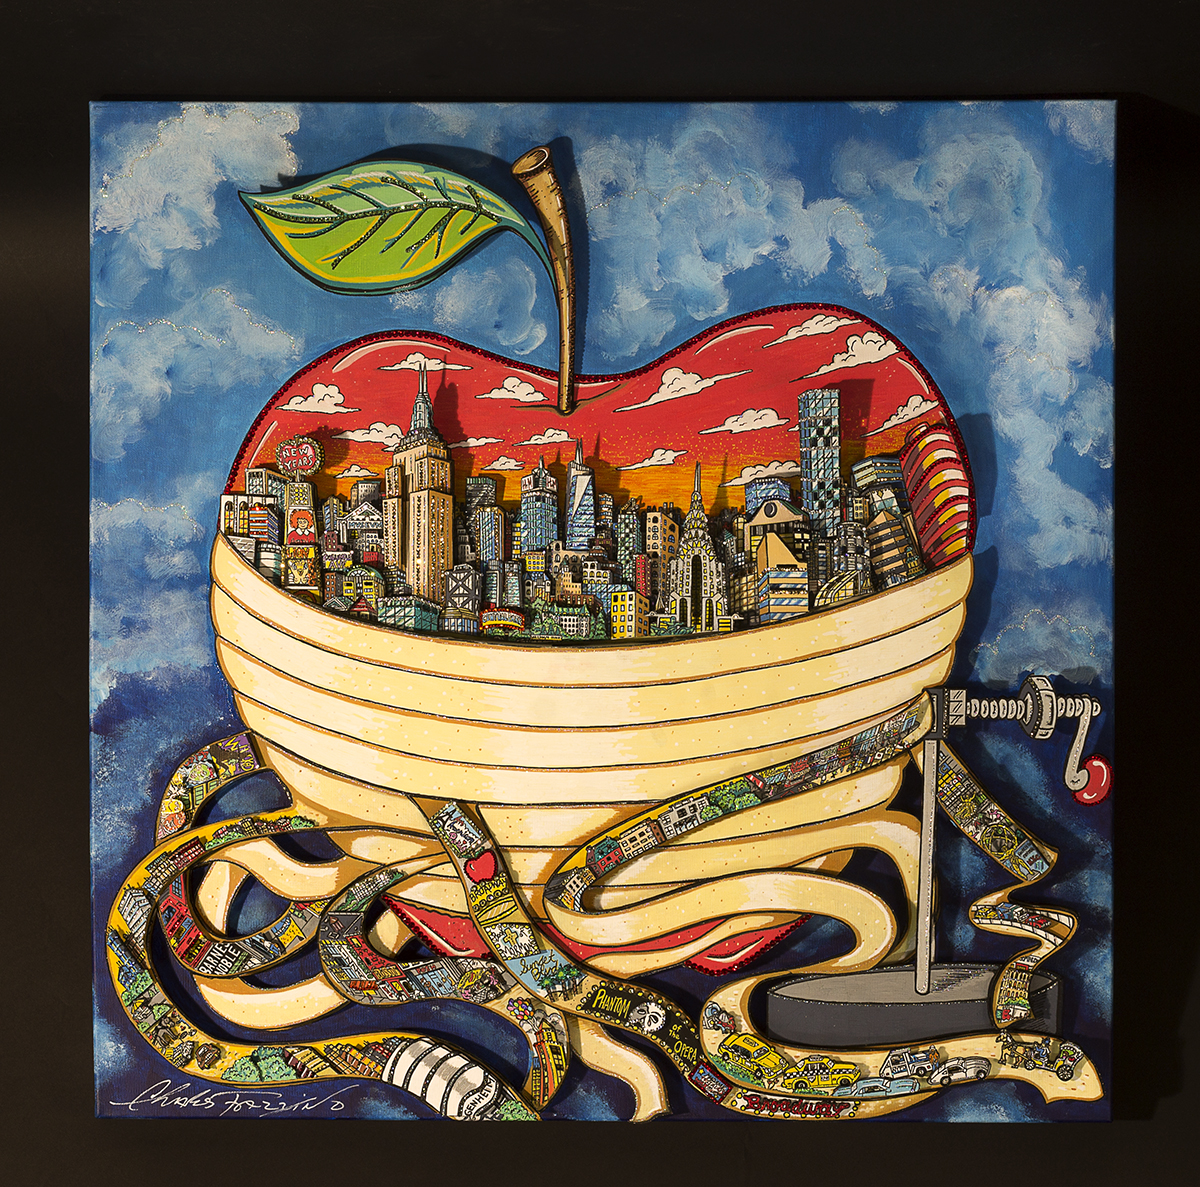 "Peeling the Big Apple" by 3d pop artist Charles Fazzino